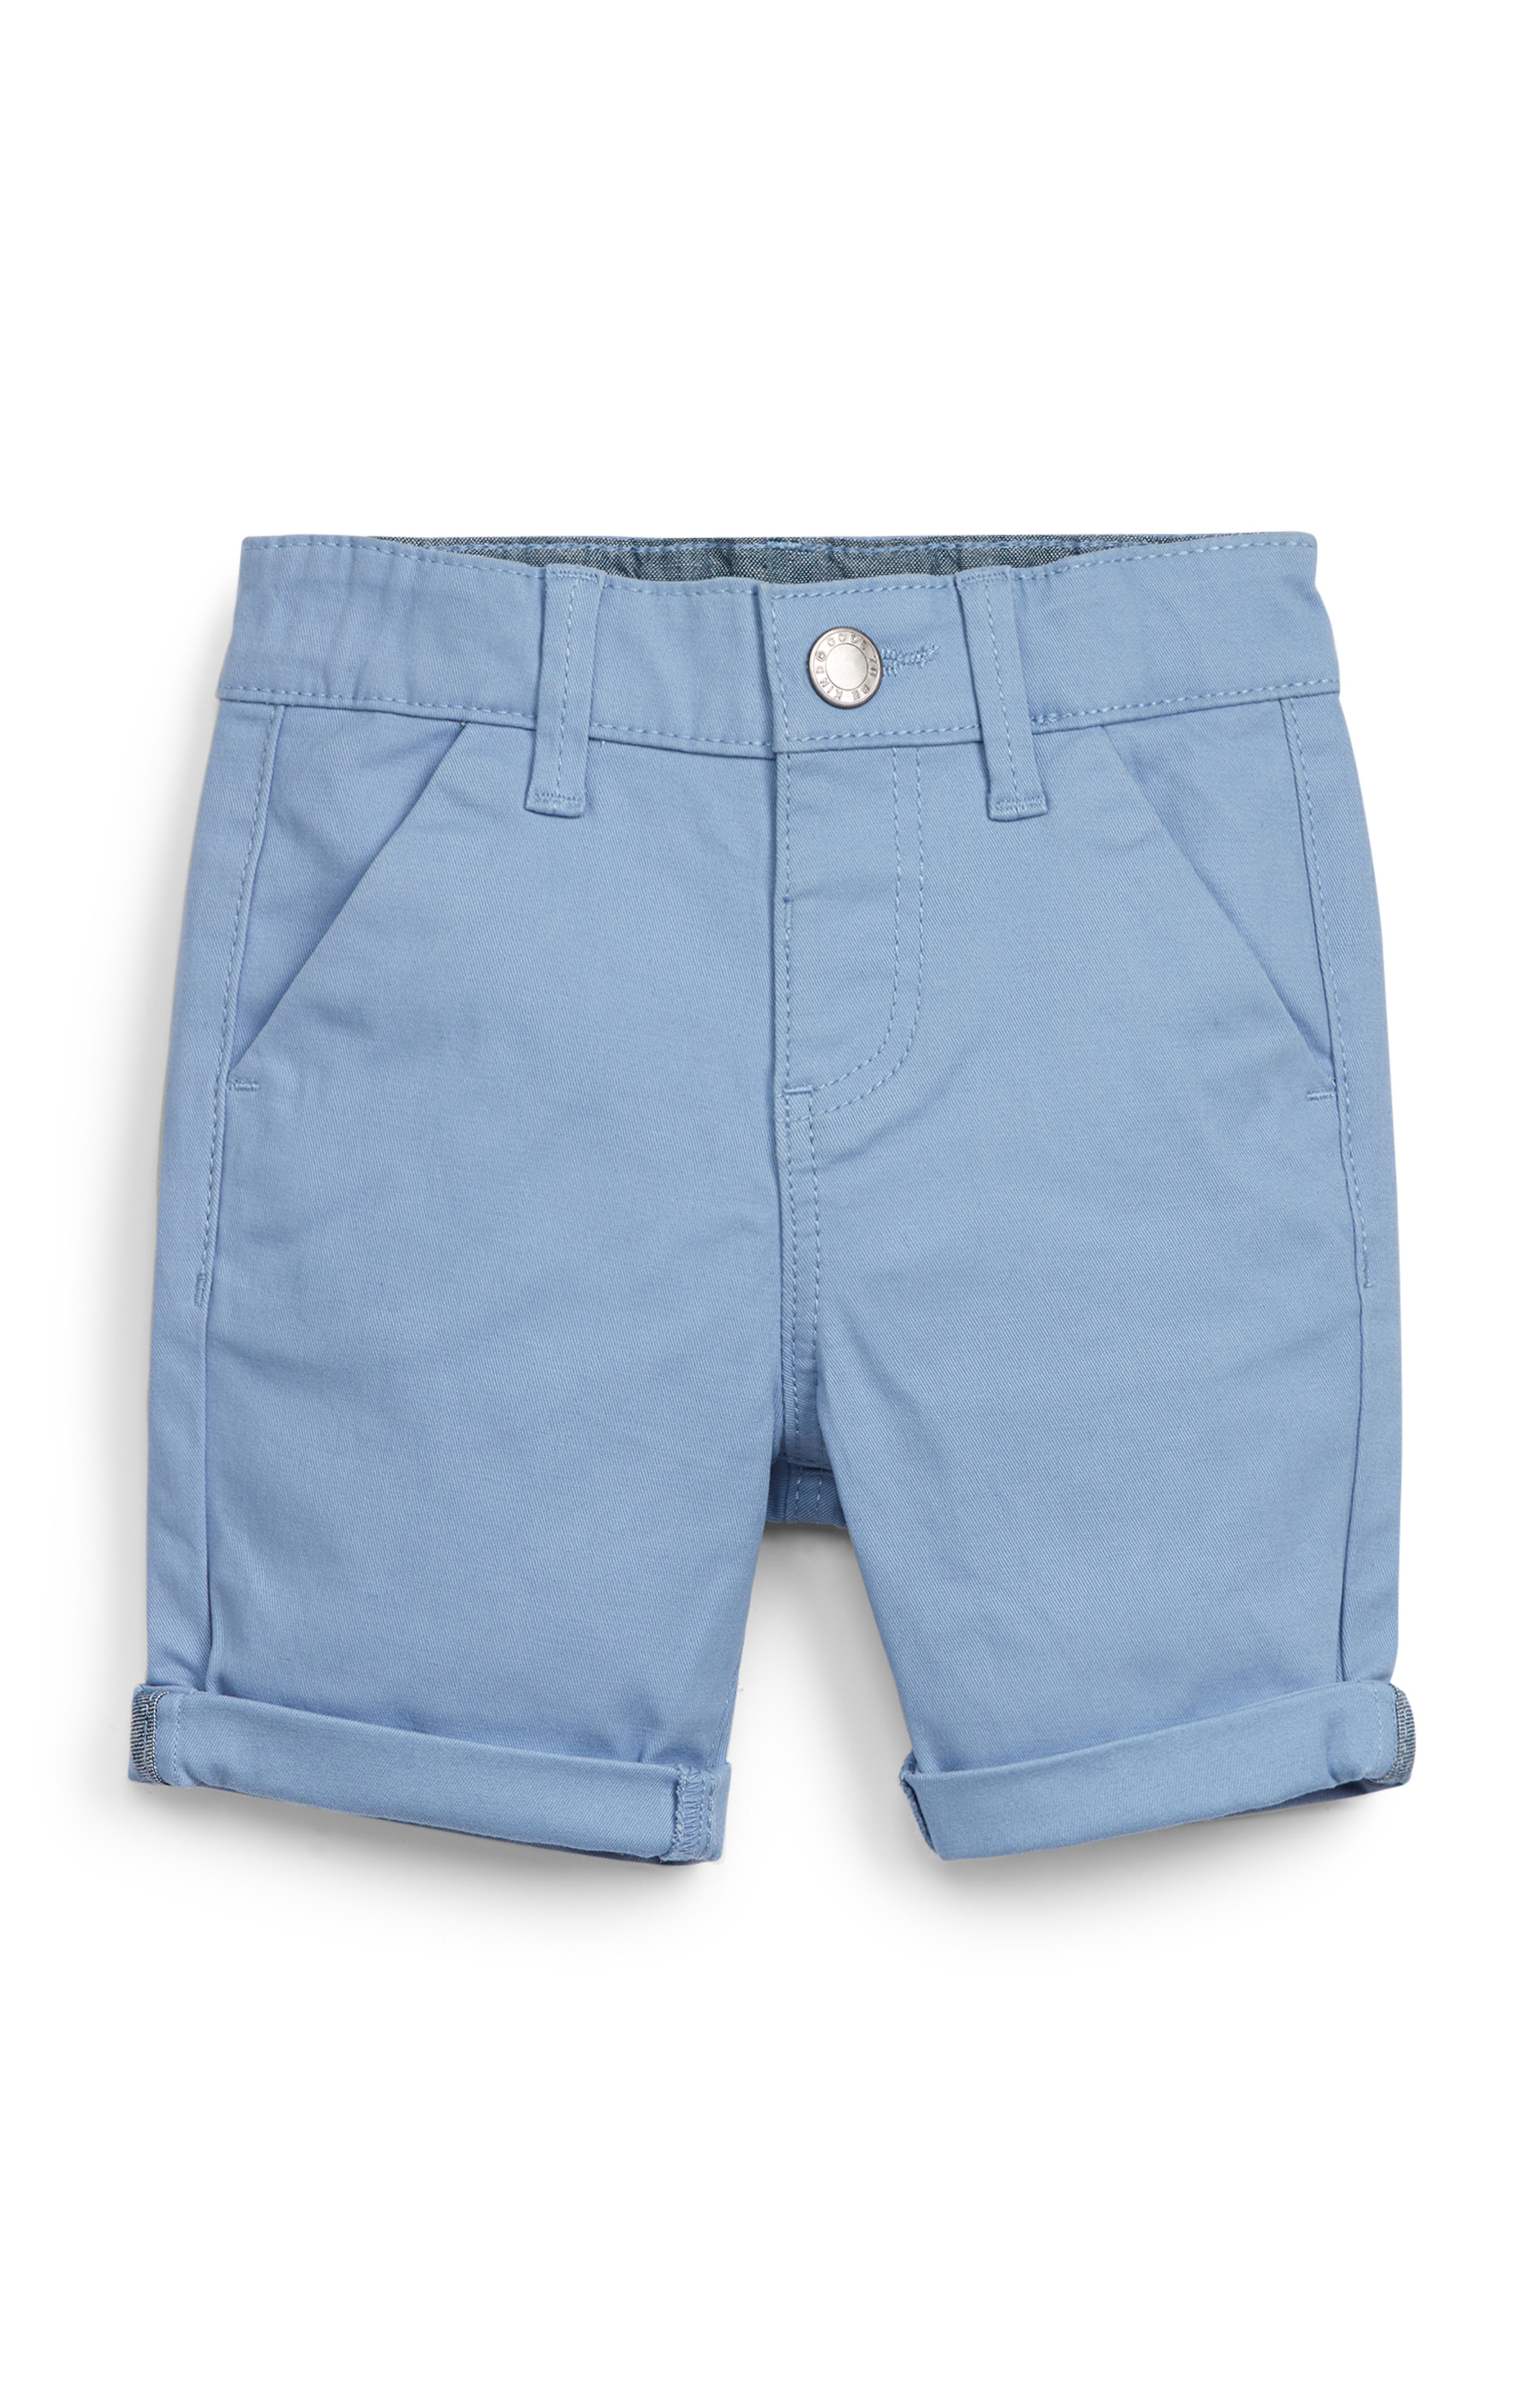 Baby Boy Blue Chino Shorts | Baby Boy Clothes | Baby & Newborn Clothes ...